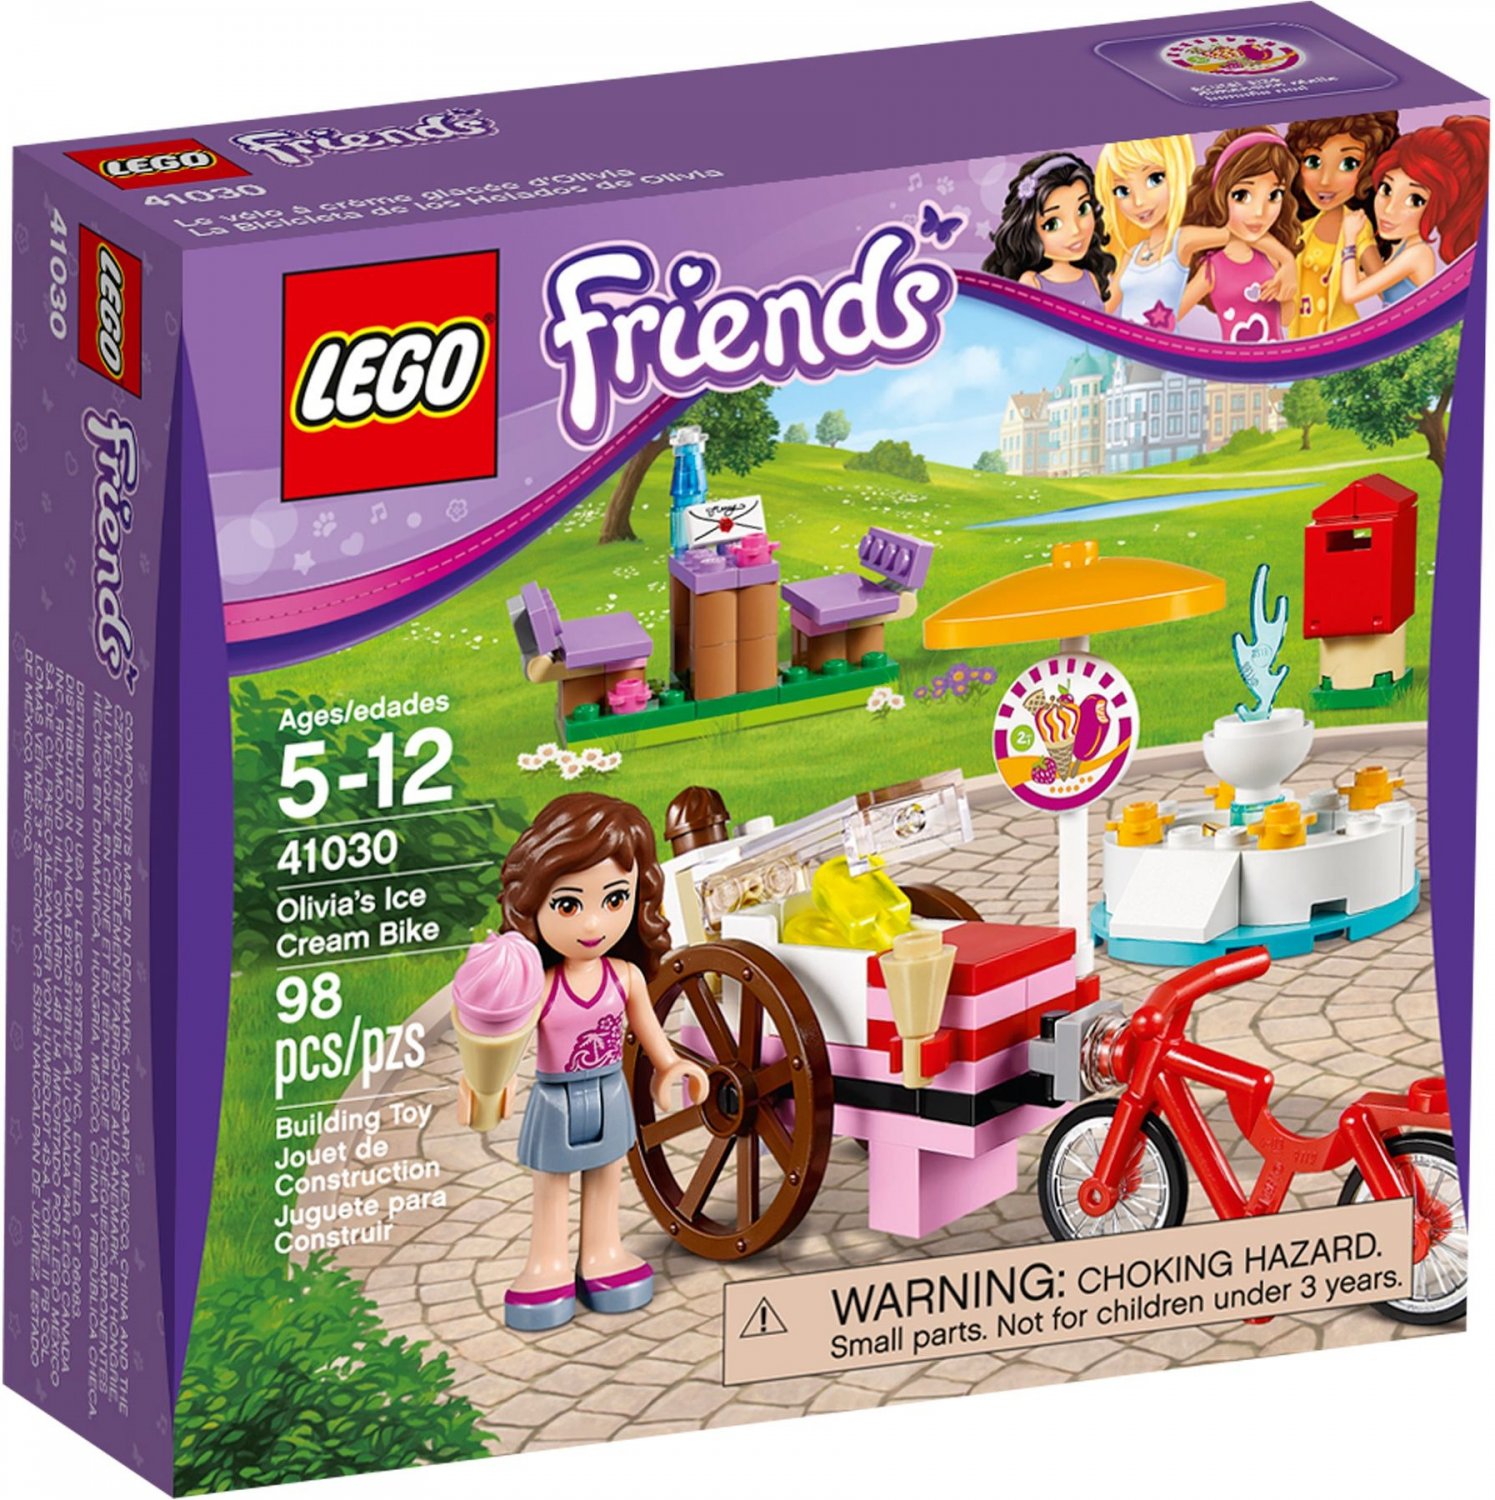 Lego Friends Olivia's Ice Cream Bike 41030 (2014) New! Sealed set!